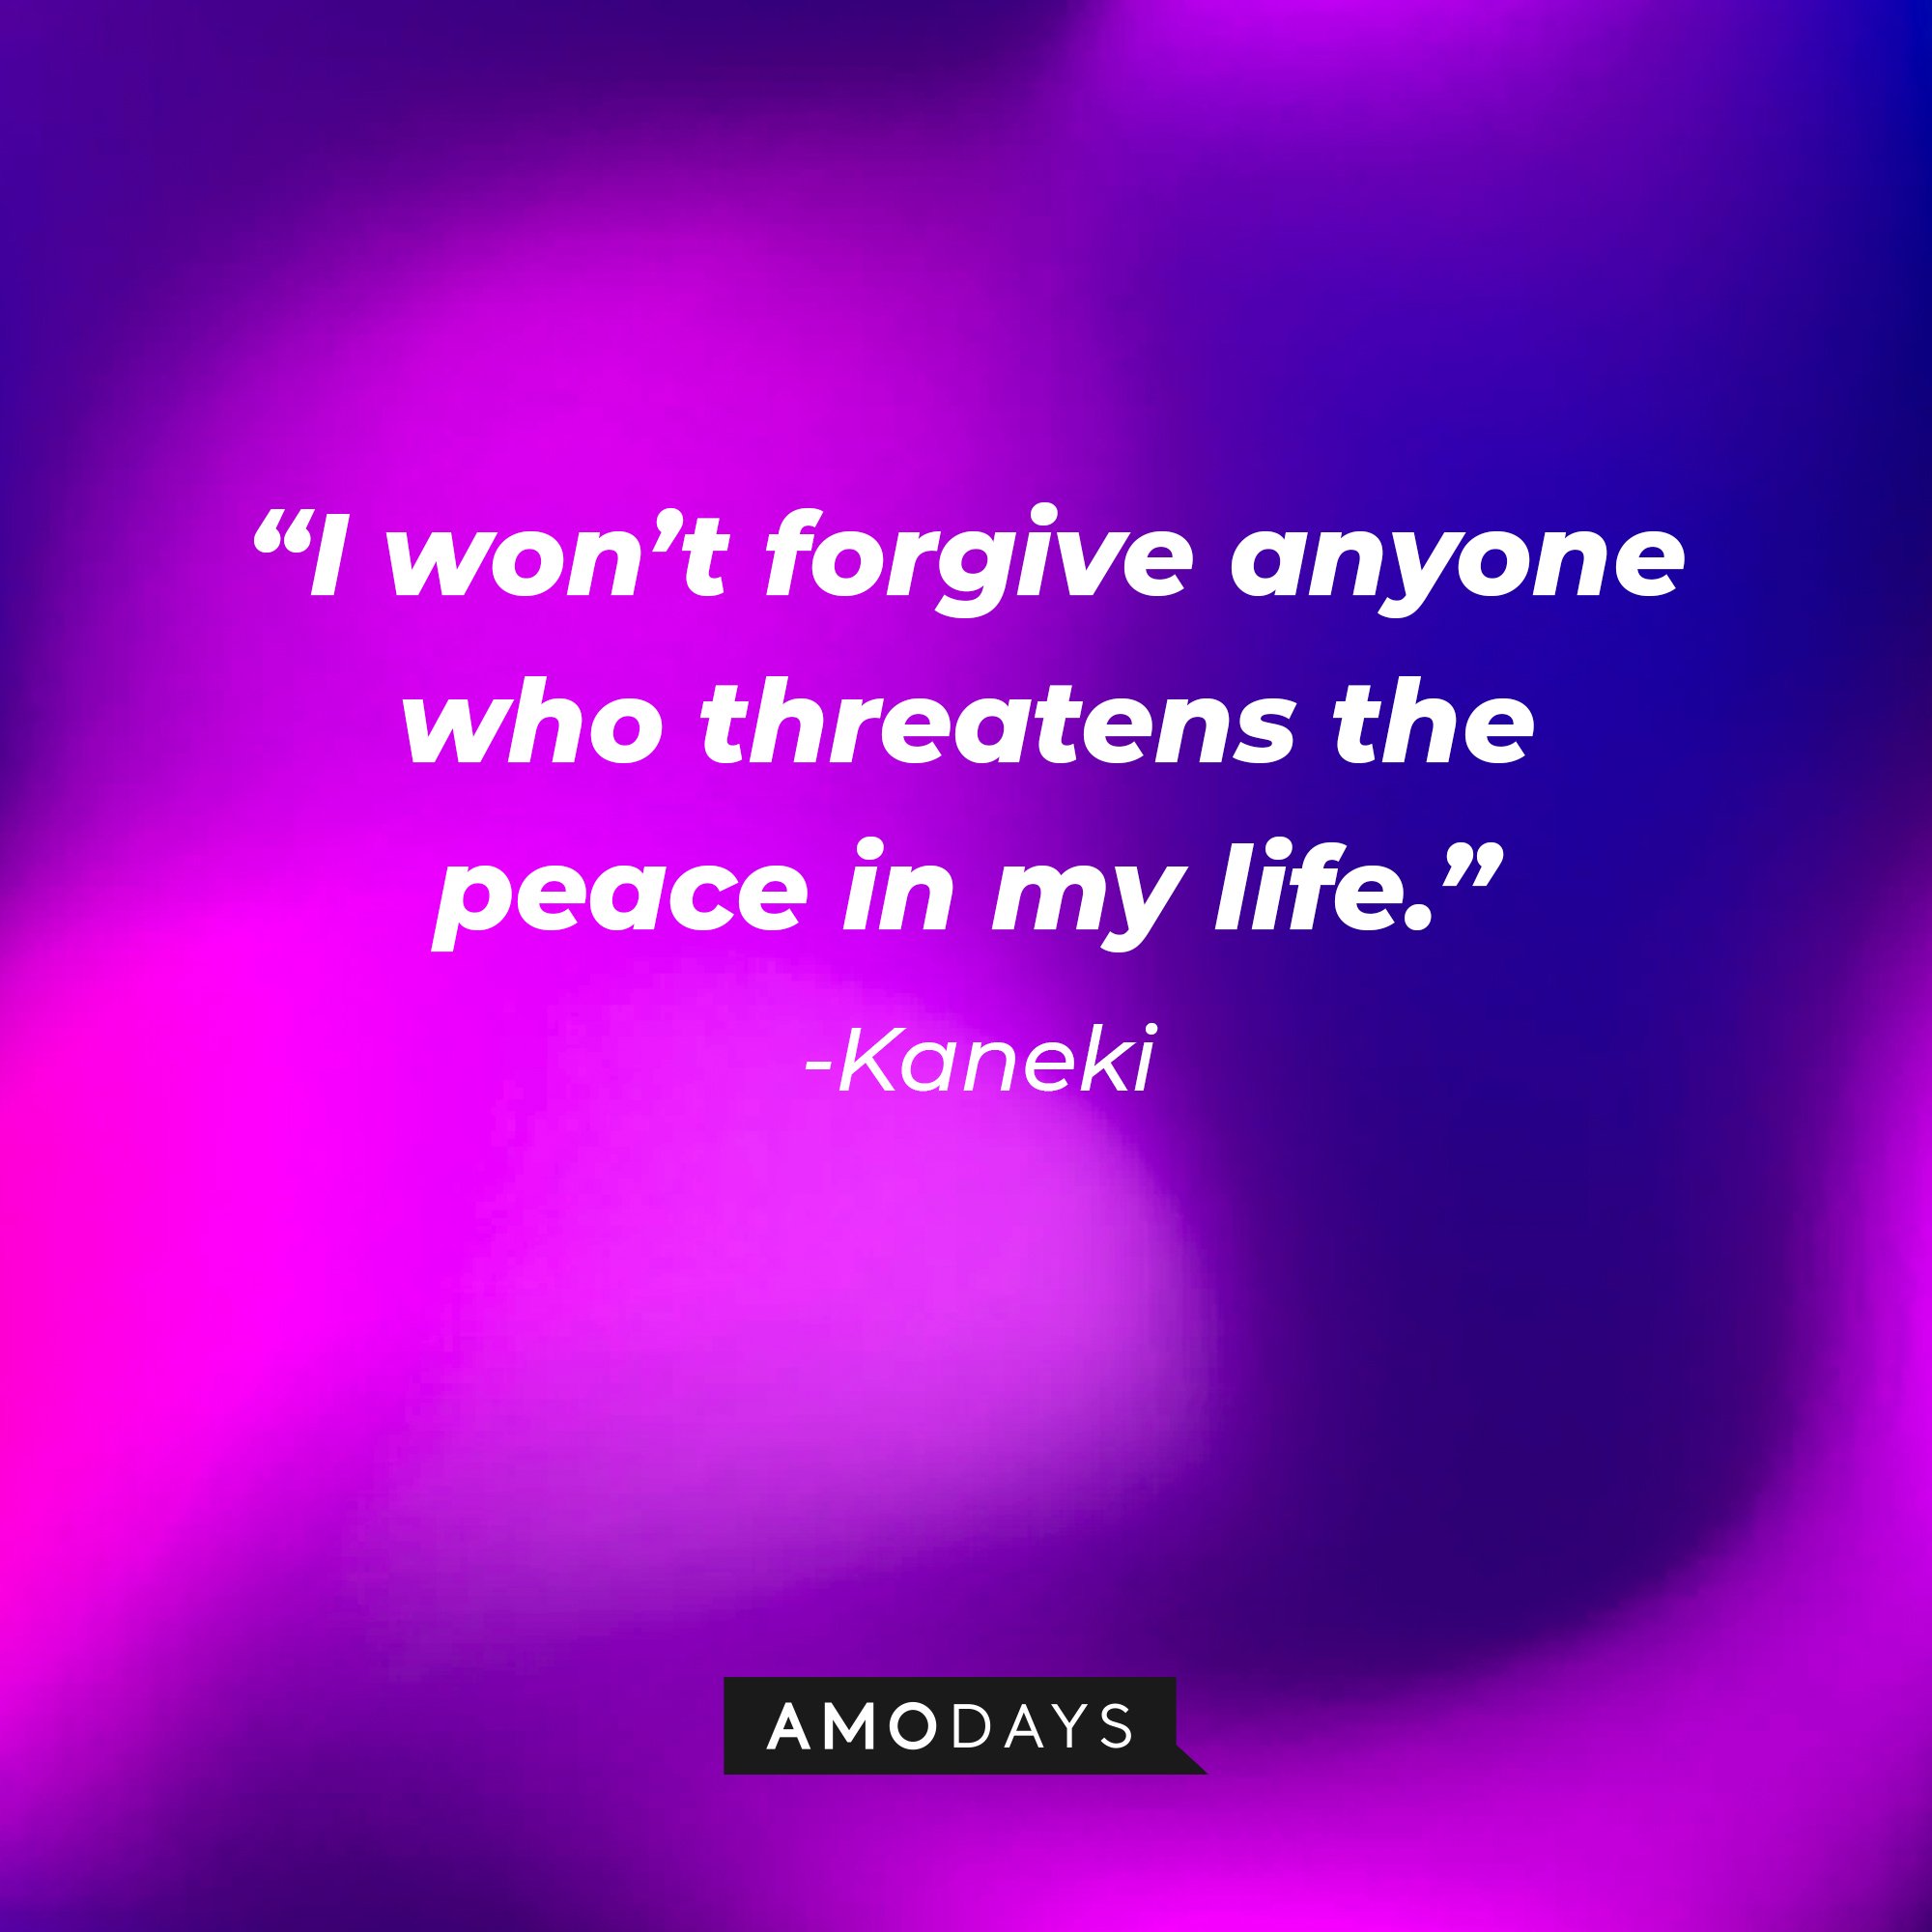  Kaneki's quote: “I won’t forgive anyone who threatens the peace in my life.” | Image: AmoDays